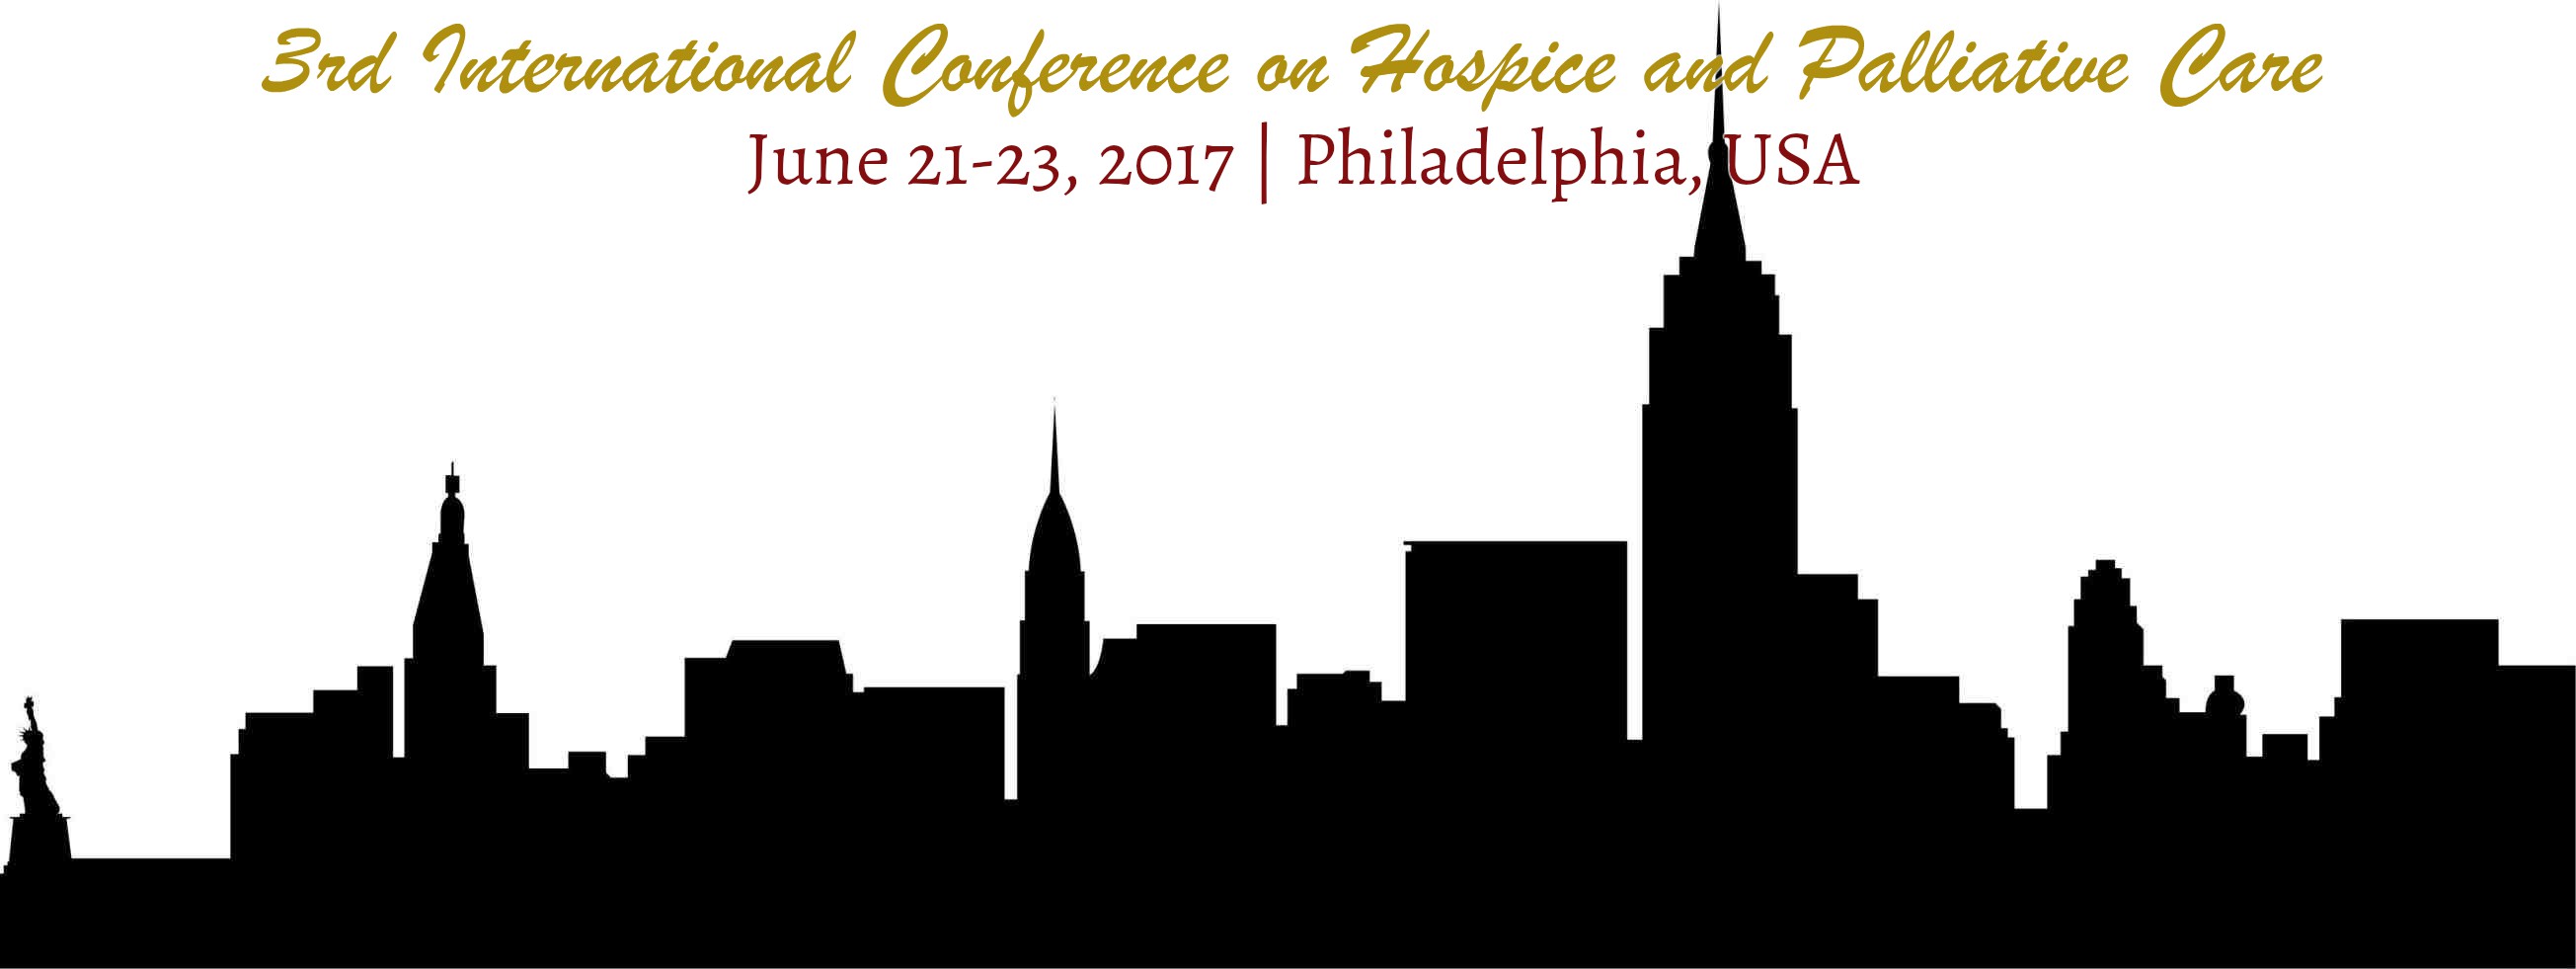 IHPC'17 - 3rd Int'l Conf on Hospice and Palliative Care, Philadelphia, Pennsylvania, United States